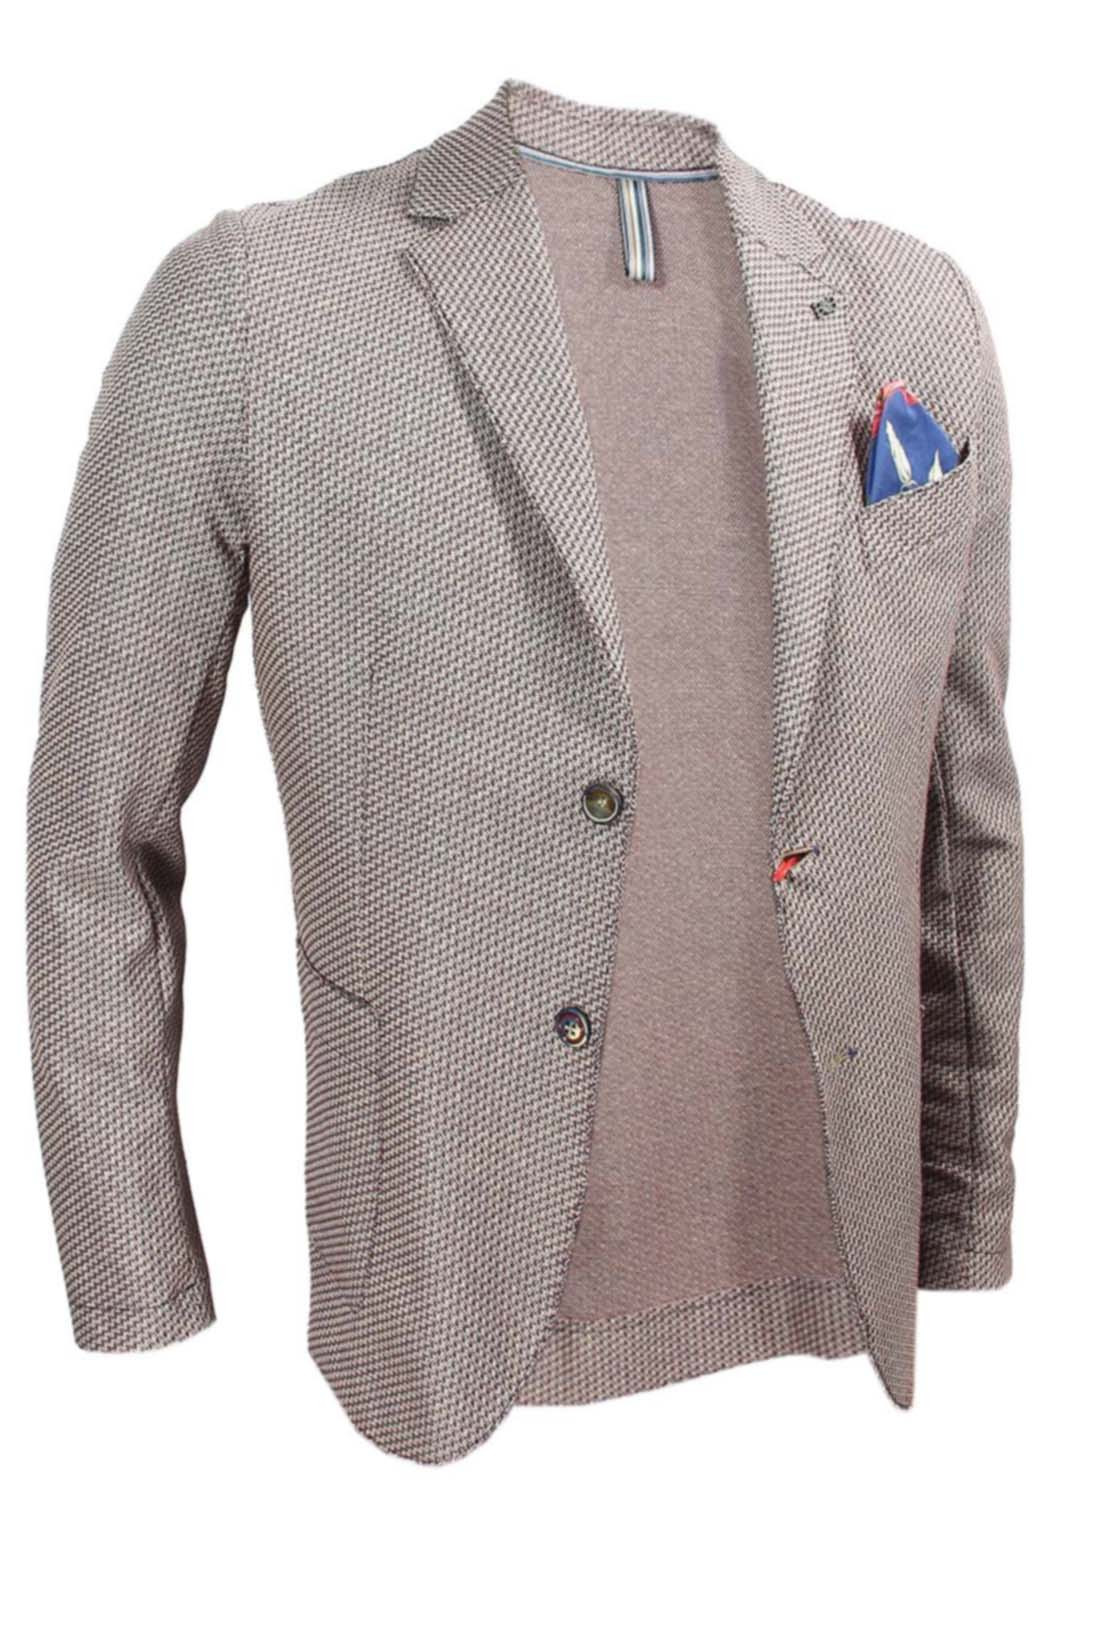 Трикотажный пиджак Bob - купить за 25600 руб. в интернет магазине TAKESHY  KUROSAWA, арт. Piscy427